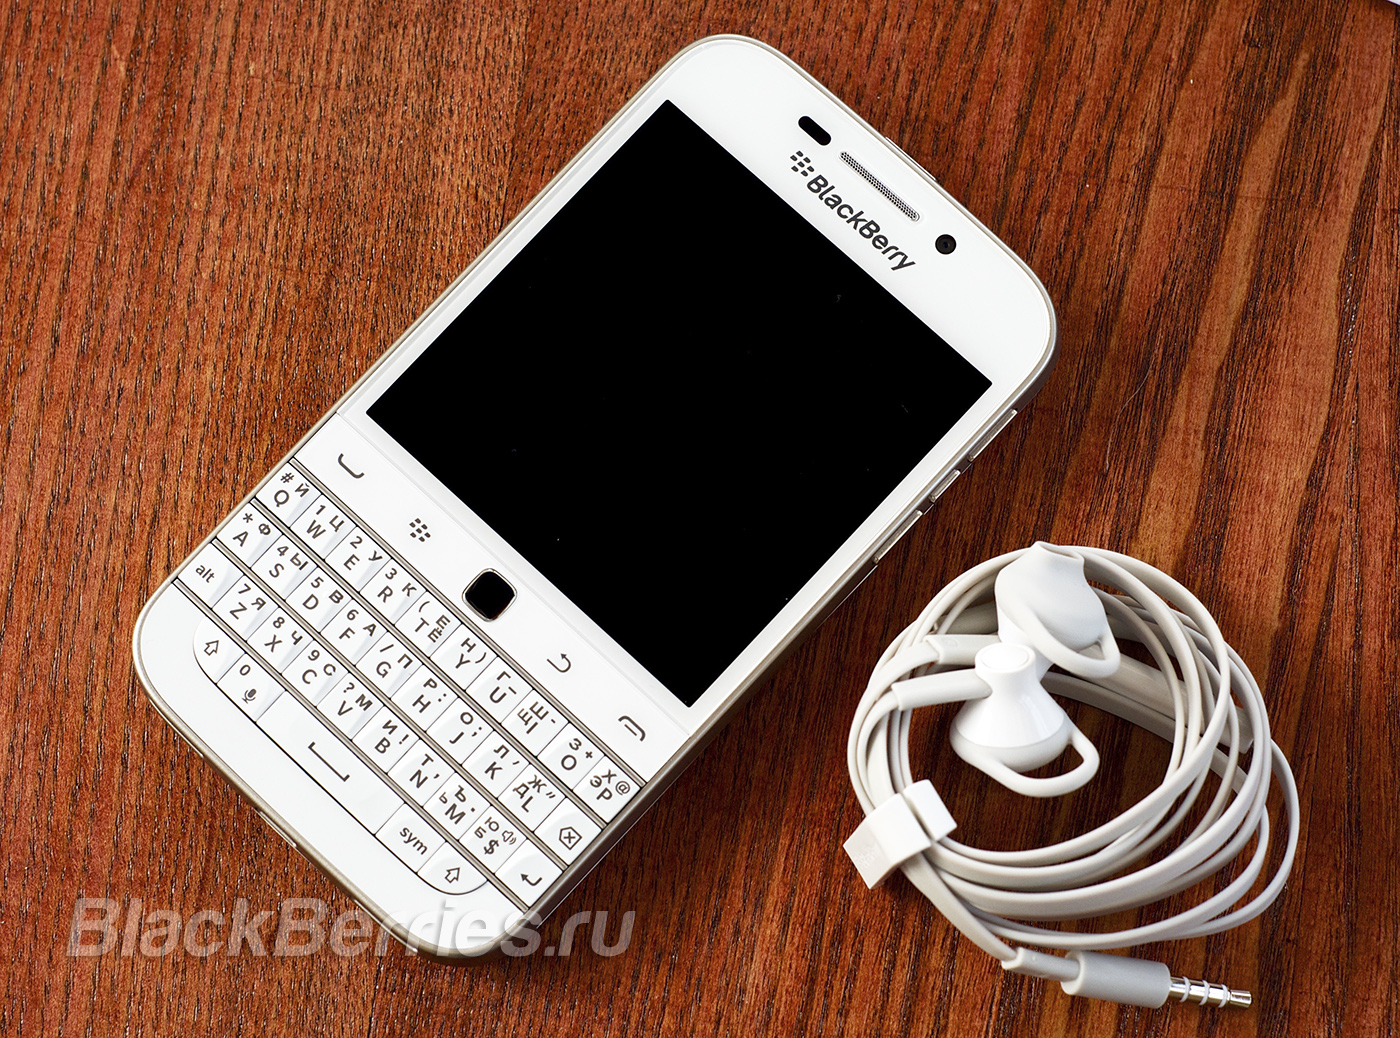 BlackBerry-Classic-White-27